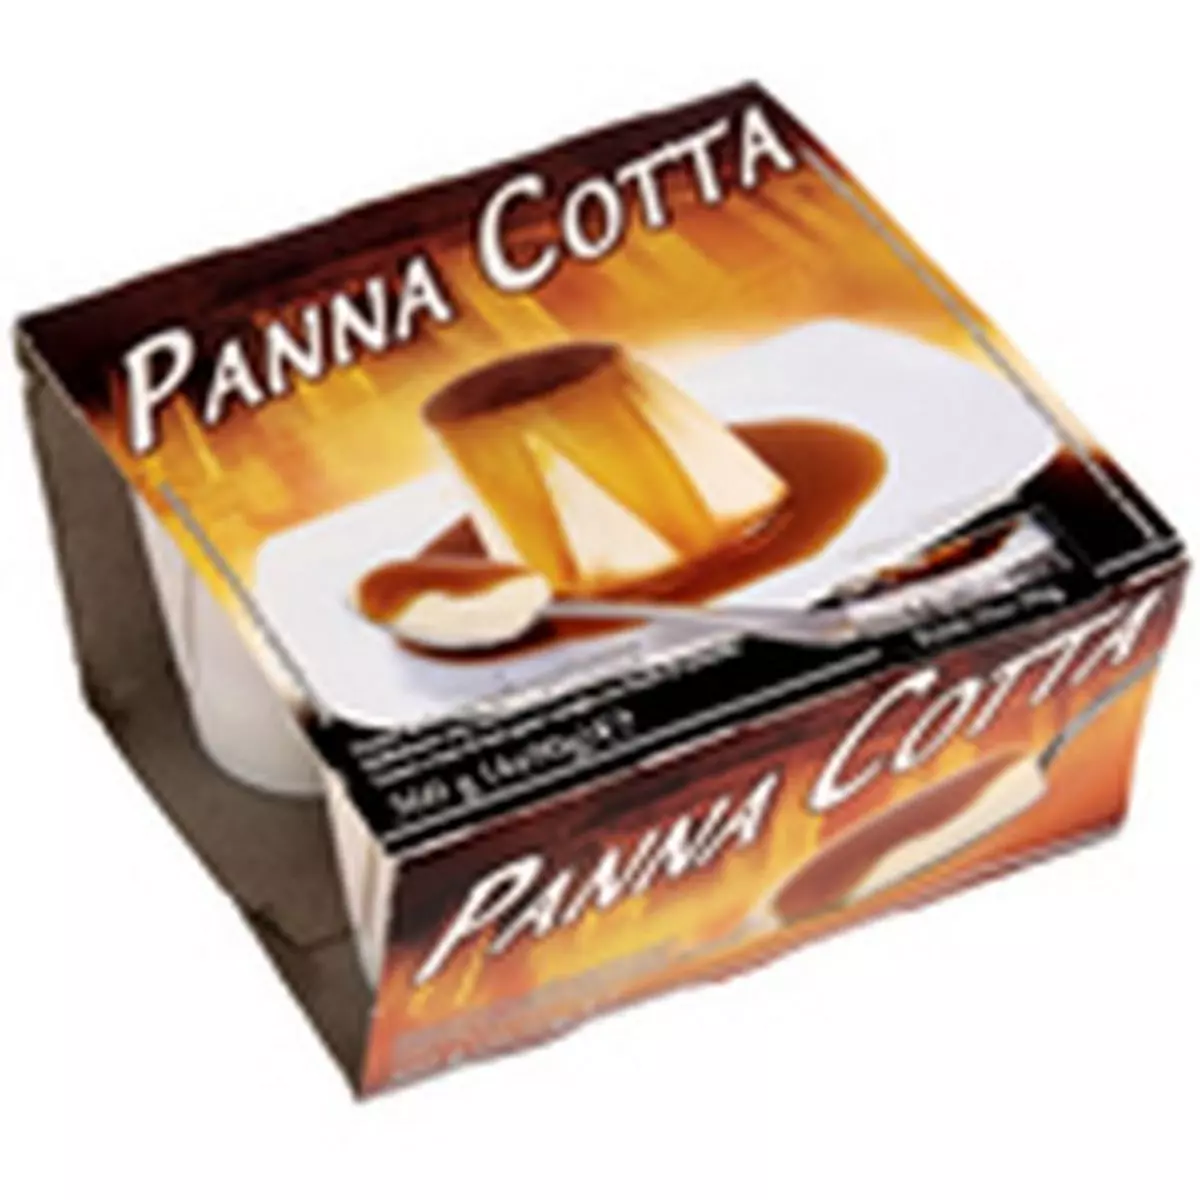 DISCOUNT Panna cotta au caramel 4x90g